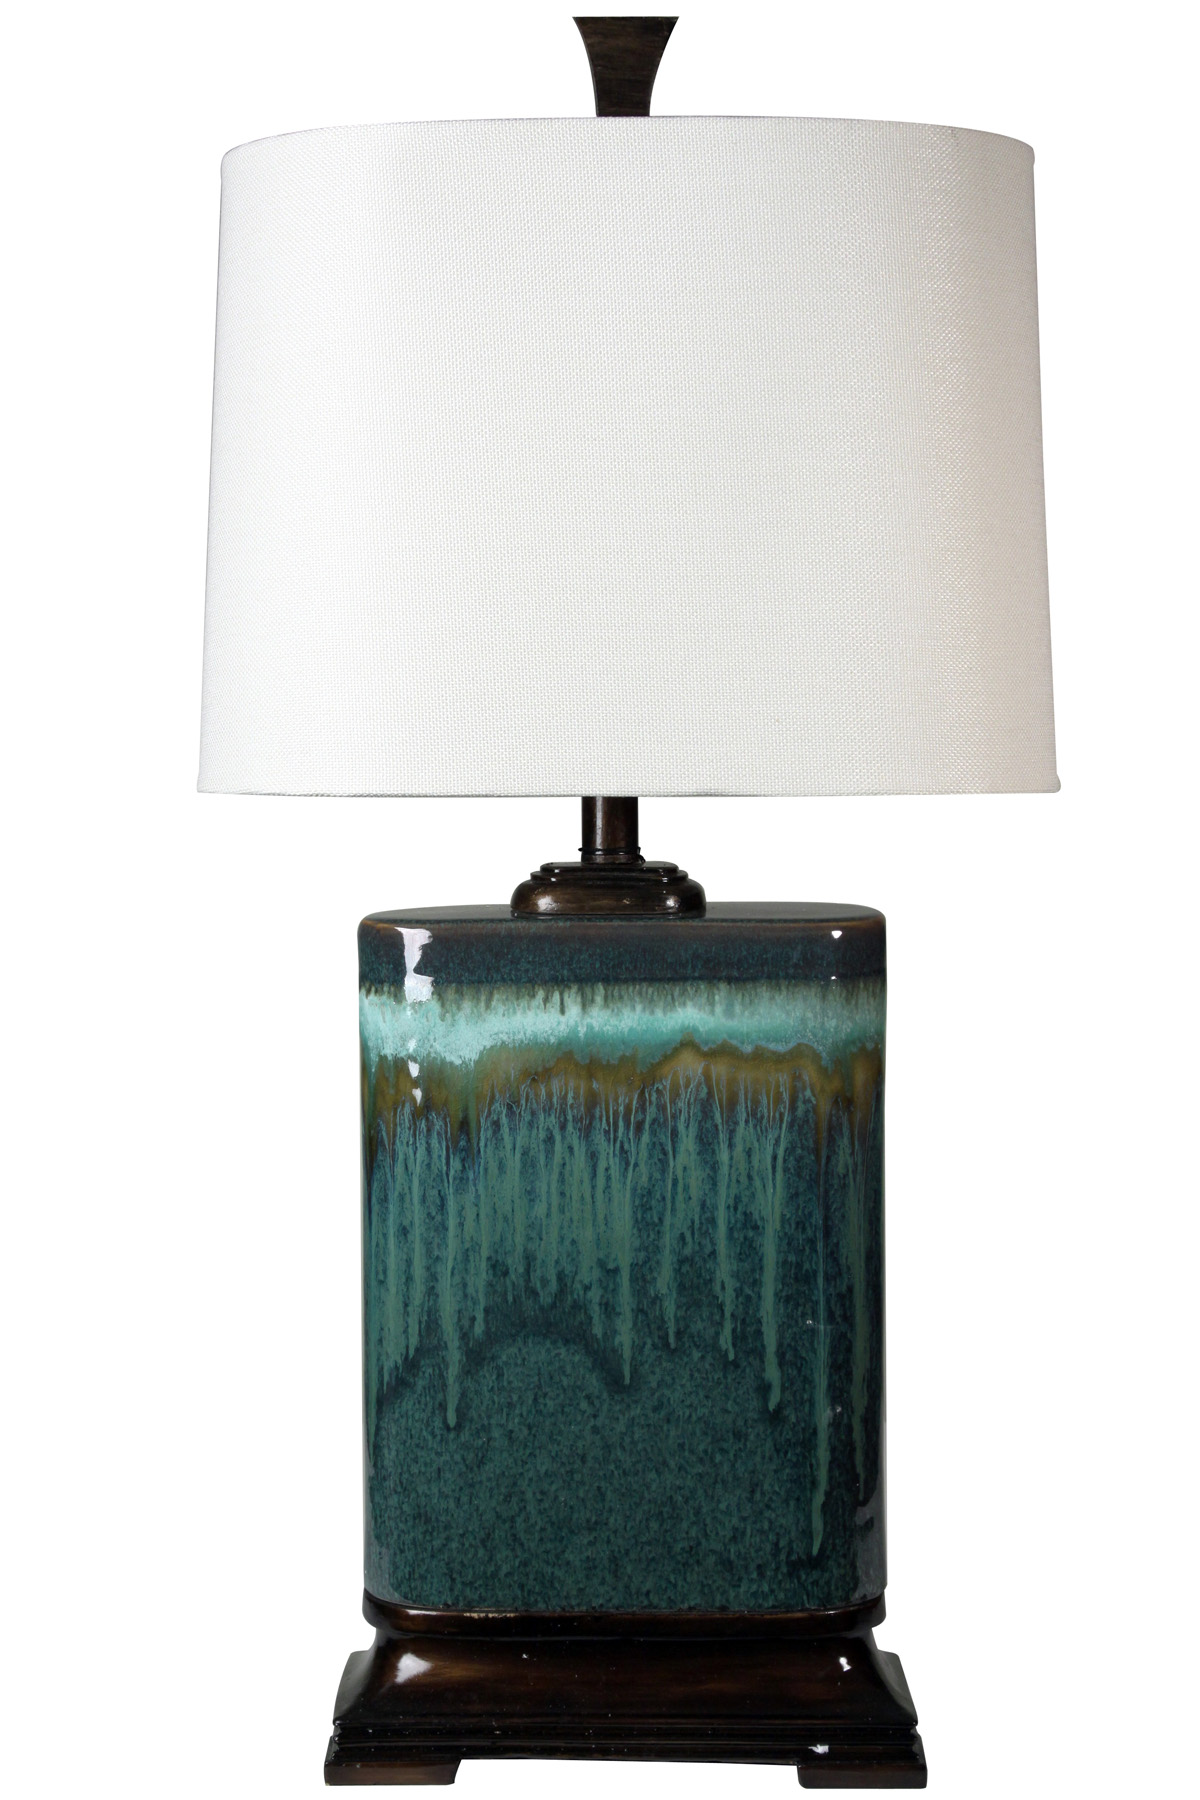 StyleCraft Carolina table lamp